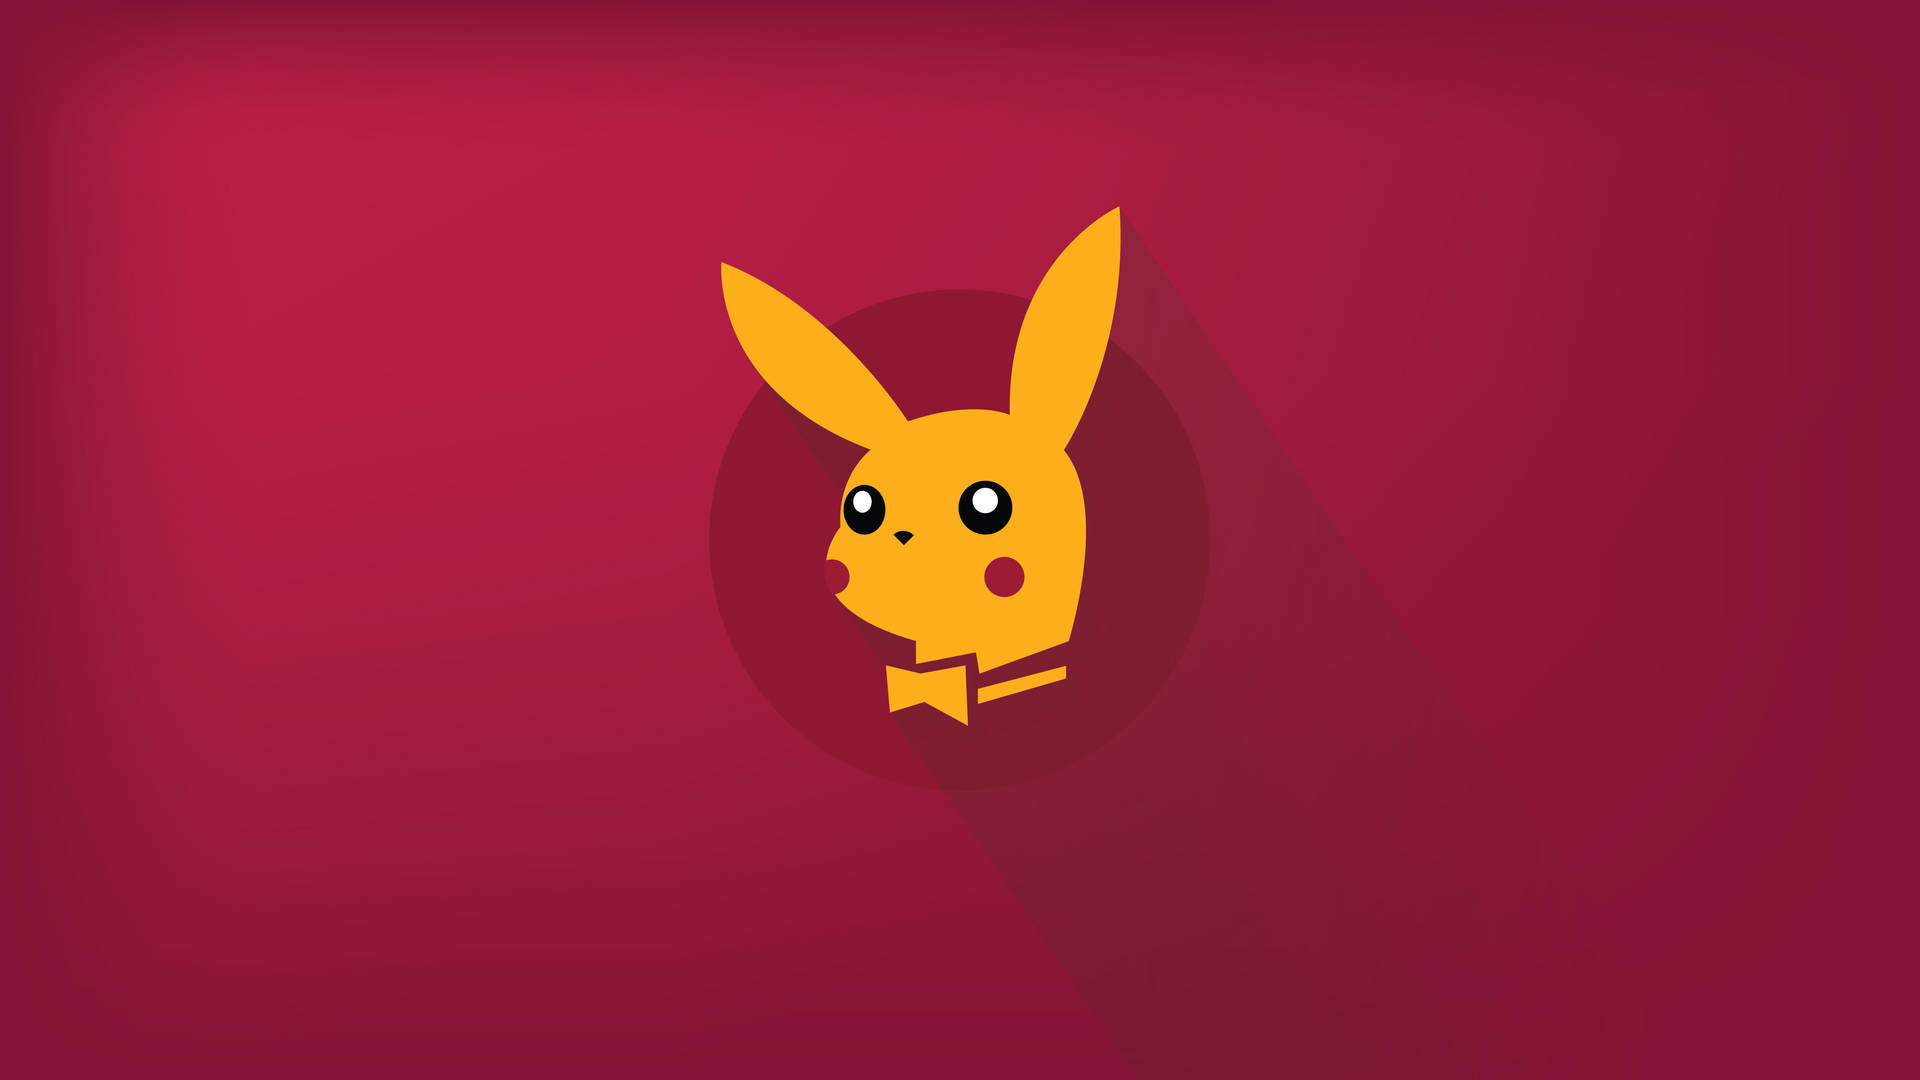 Pikachu In Rabbit Silhouette Wallpaper